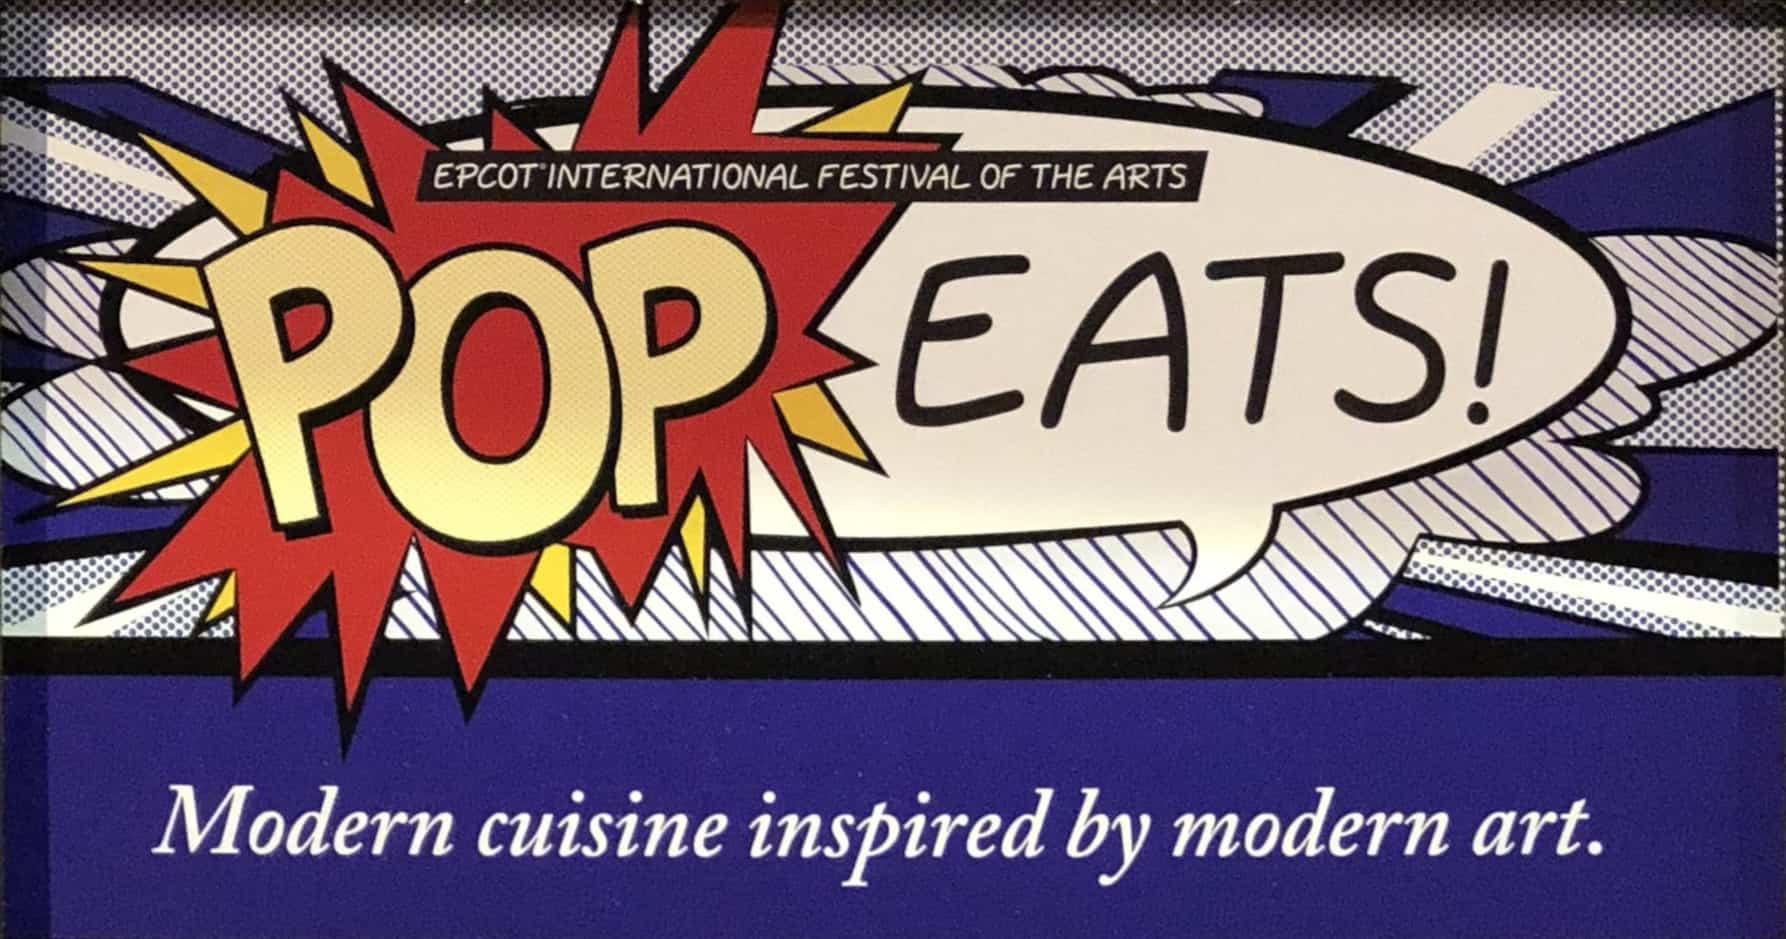 Epcot International Festival of the Arts - Pop Eats